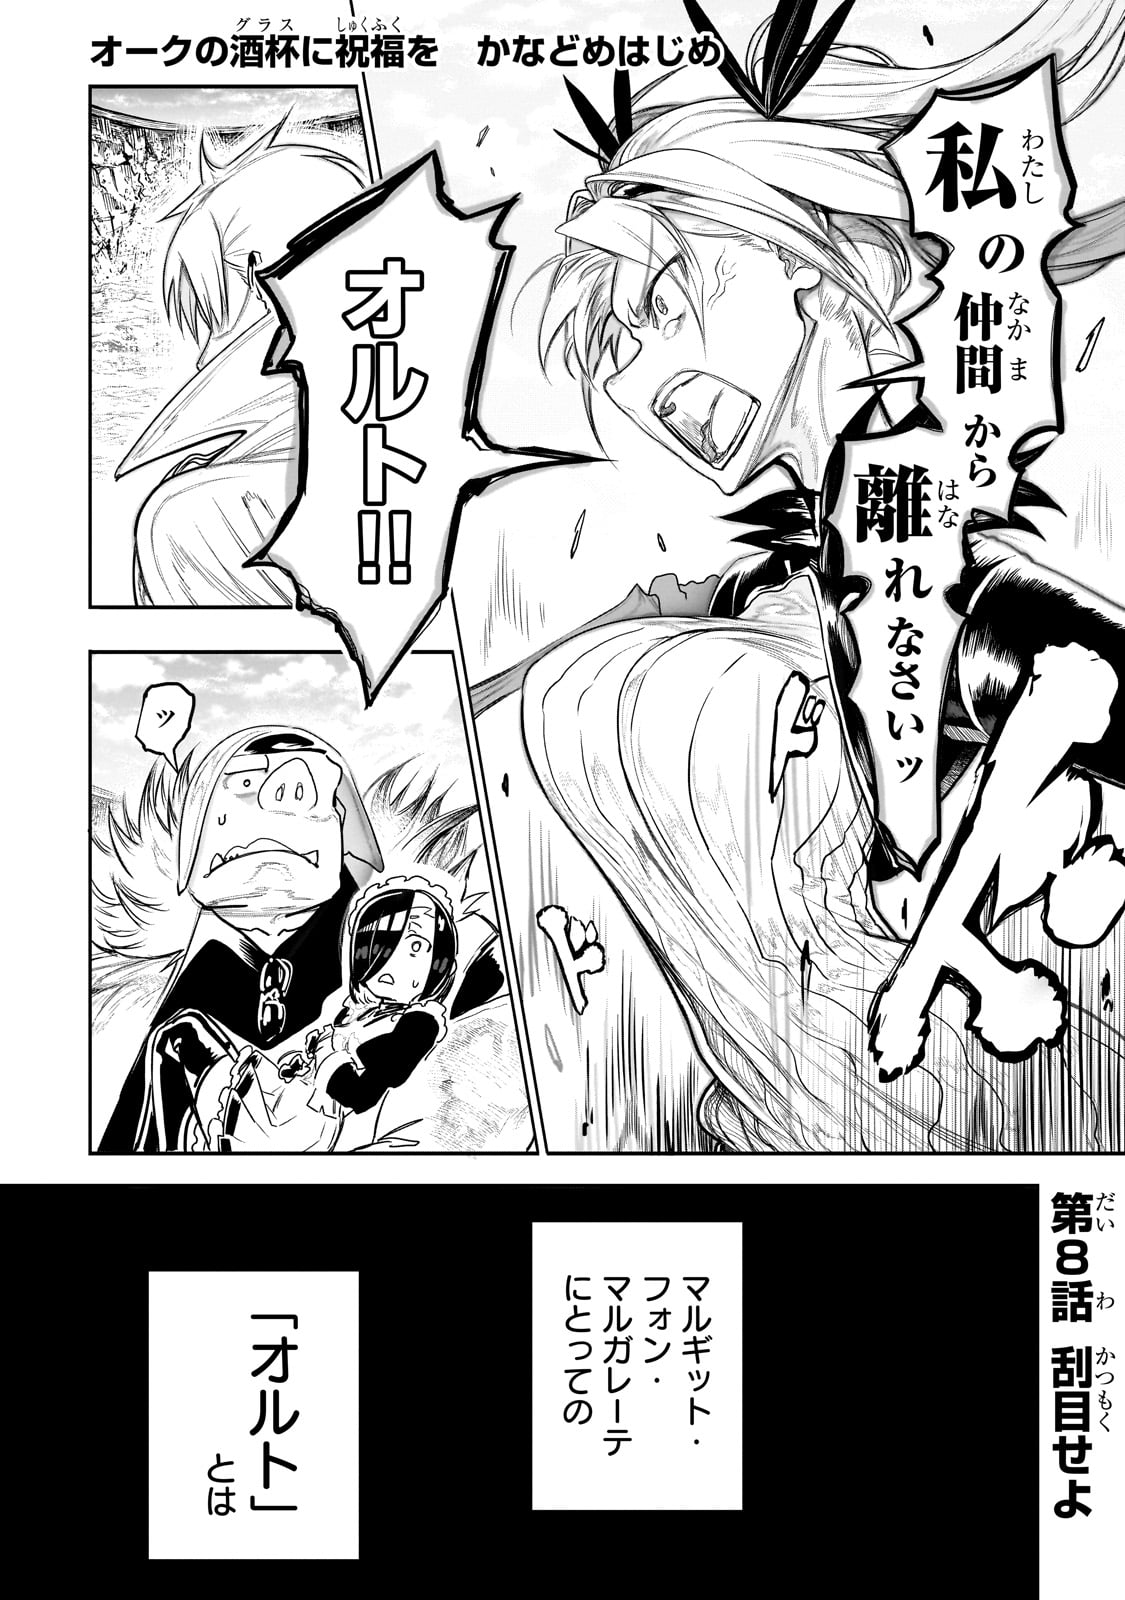 Orc no Shuhai ni Shukufuku wo - Chapter 8 - Page 1